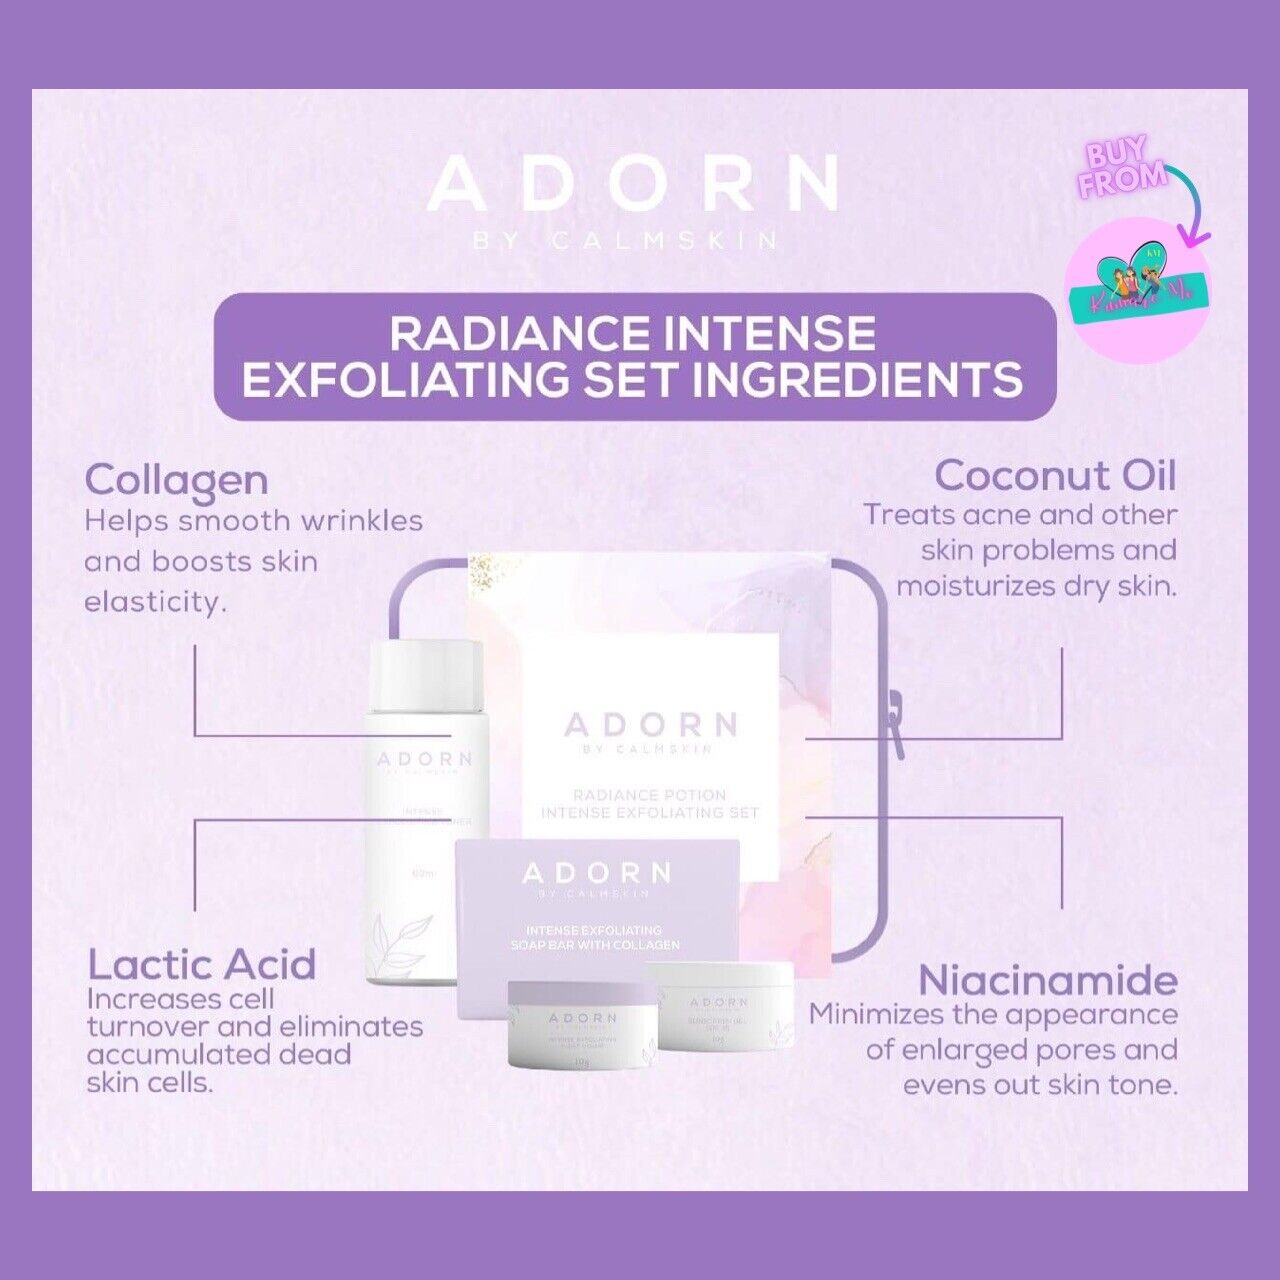 ADORN by CalmSkin Radiance Potion Intense Exfoliating Set